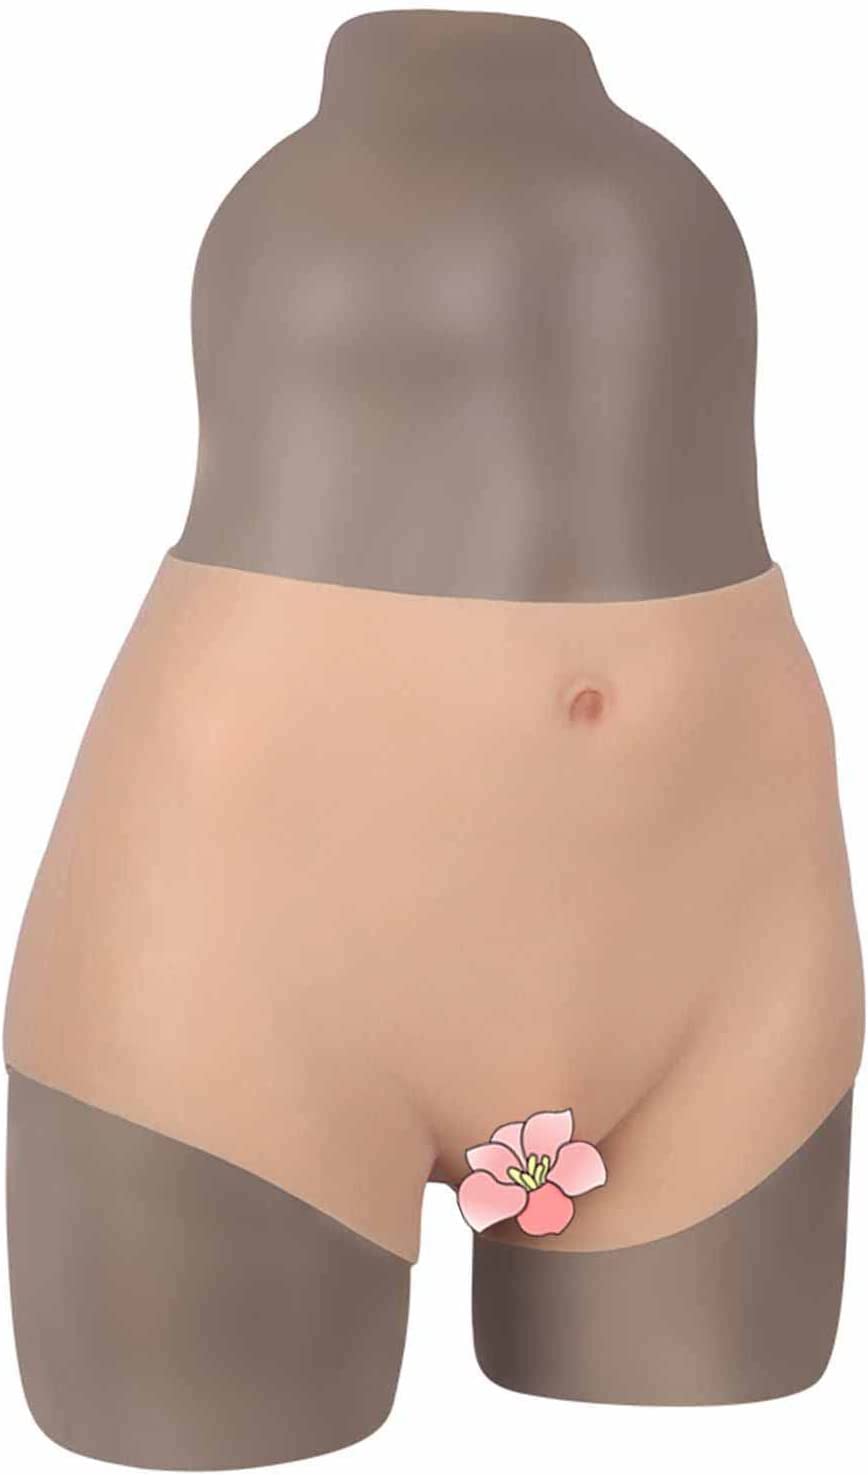 Simulated Silicone Vagina Underwear Panties for Crossdresser Drag